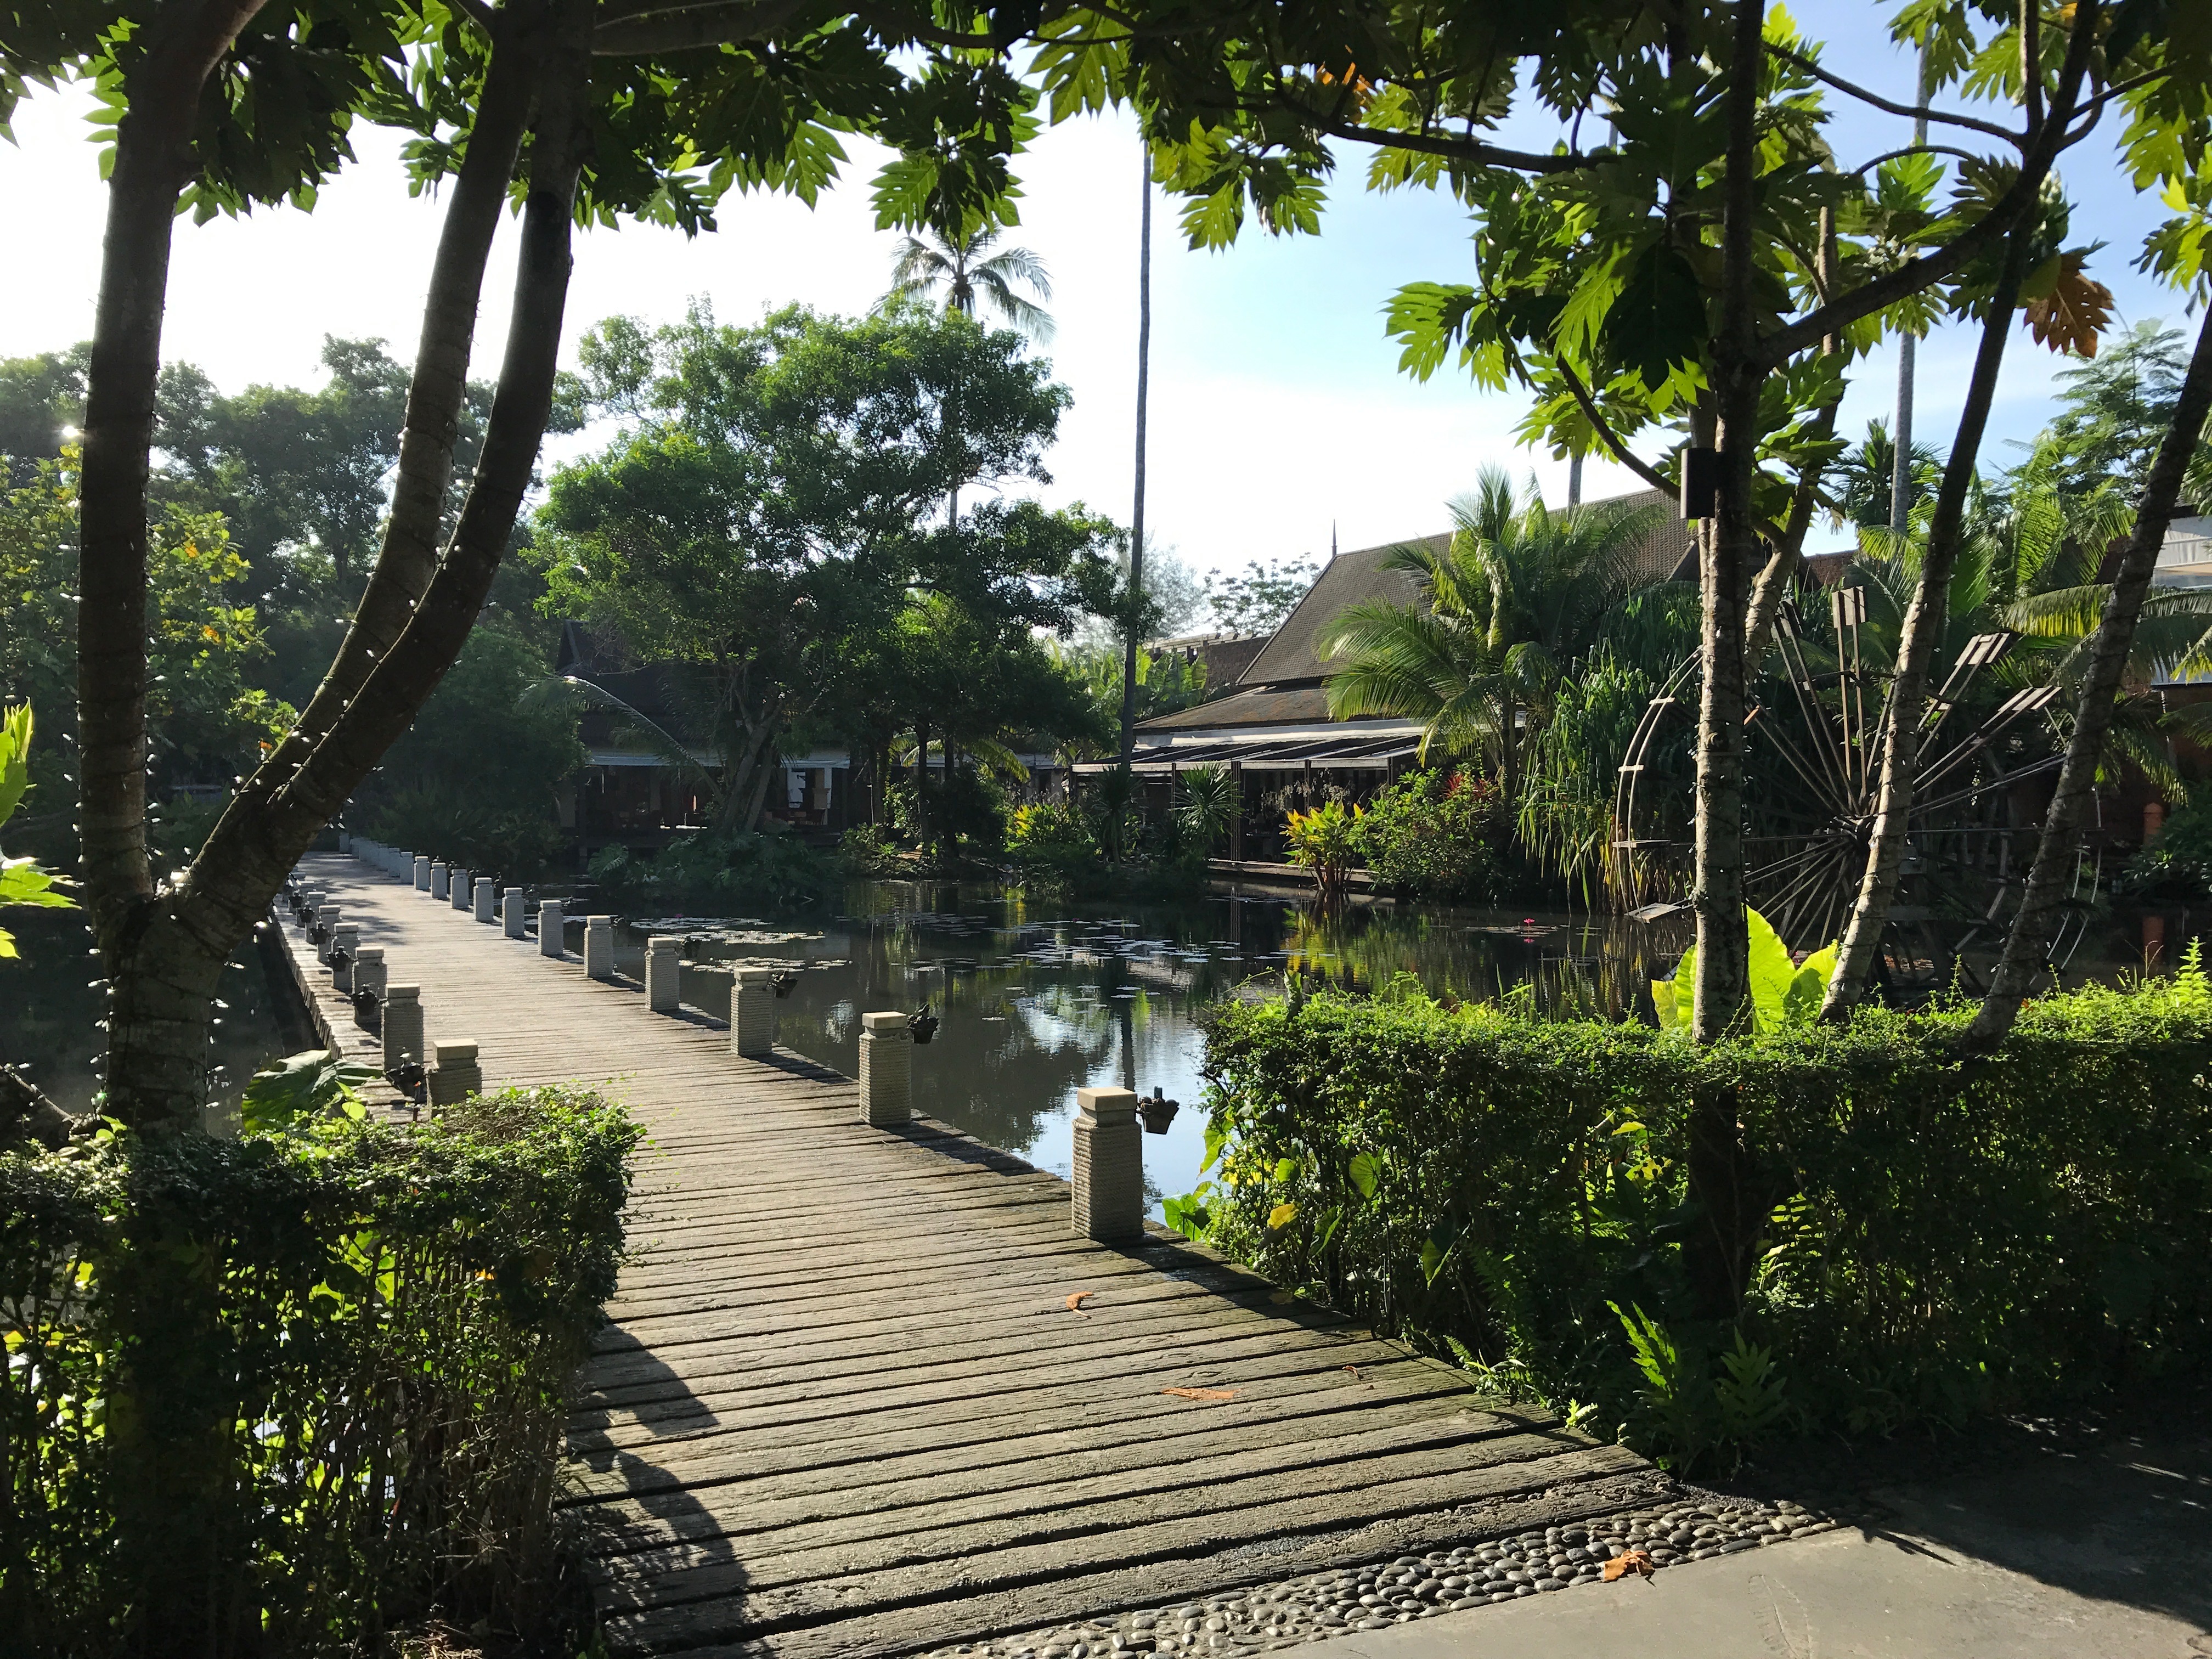 Anantara Mai Khao Phuket Villas - Cristina Nogueras - Beaches and Brie - Phuket Thailand